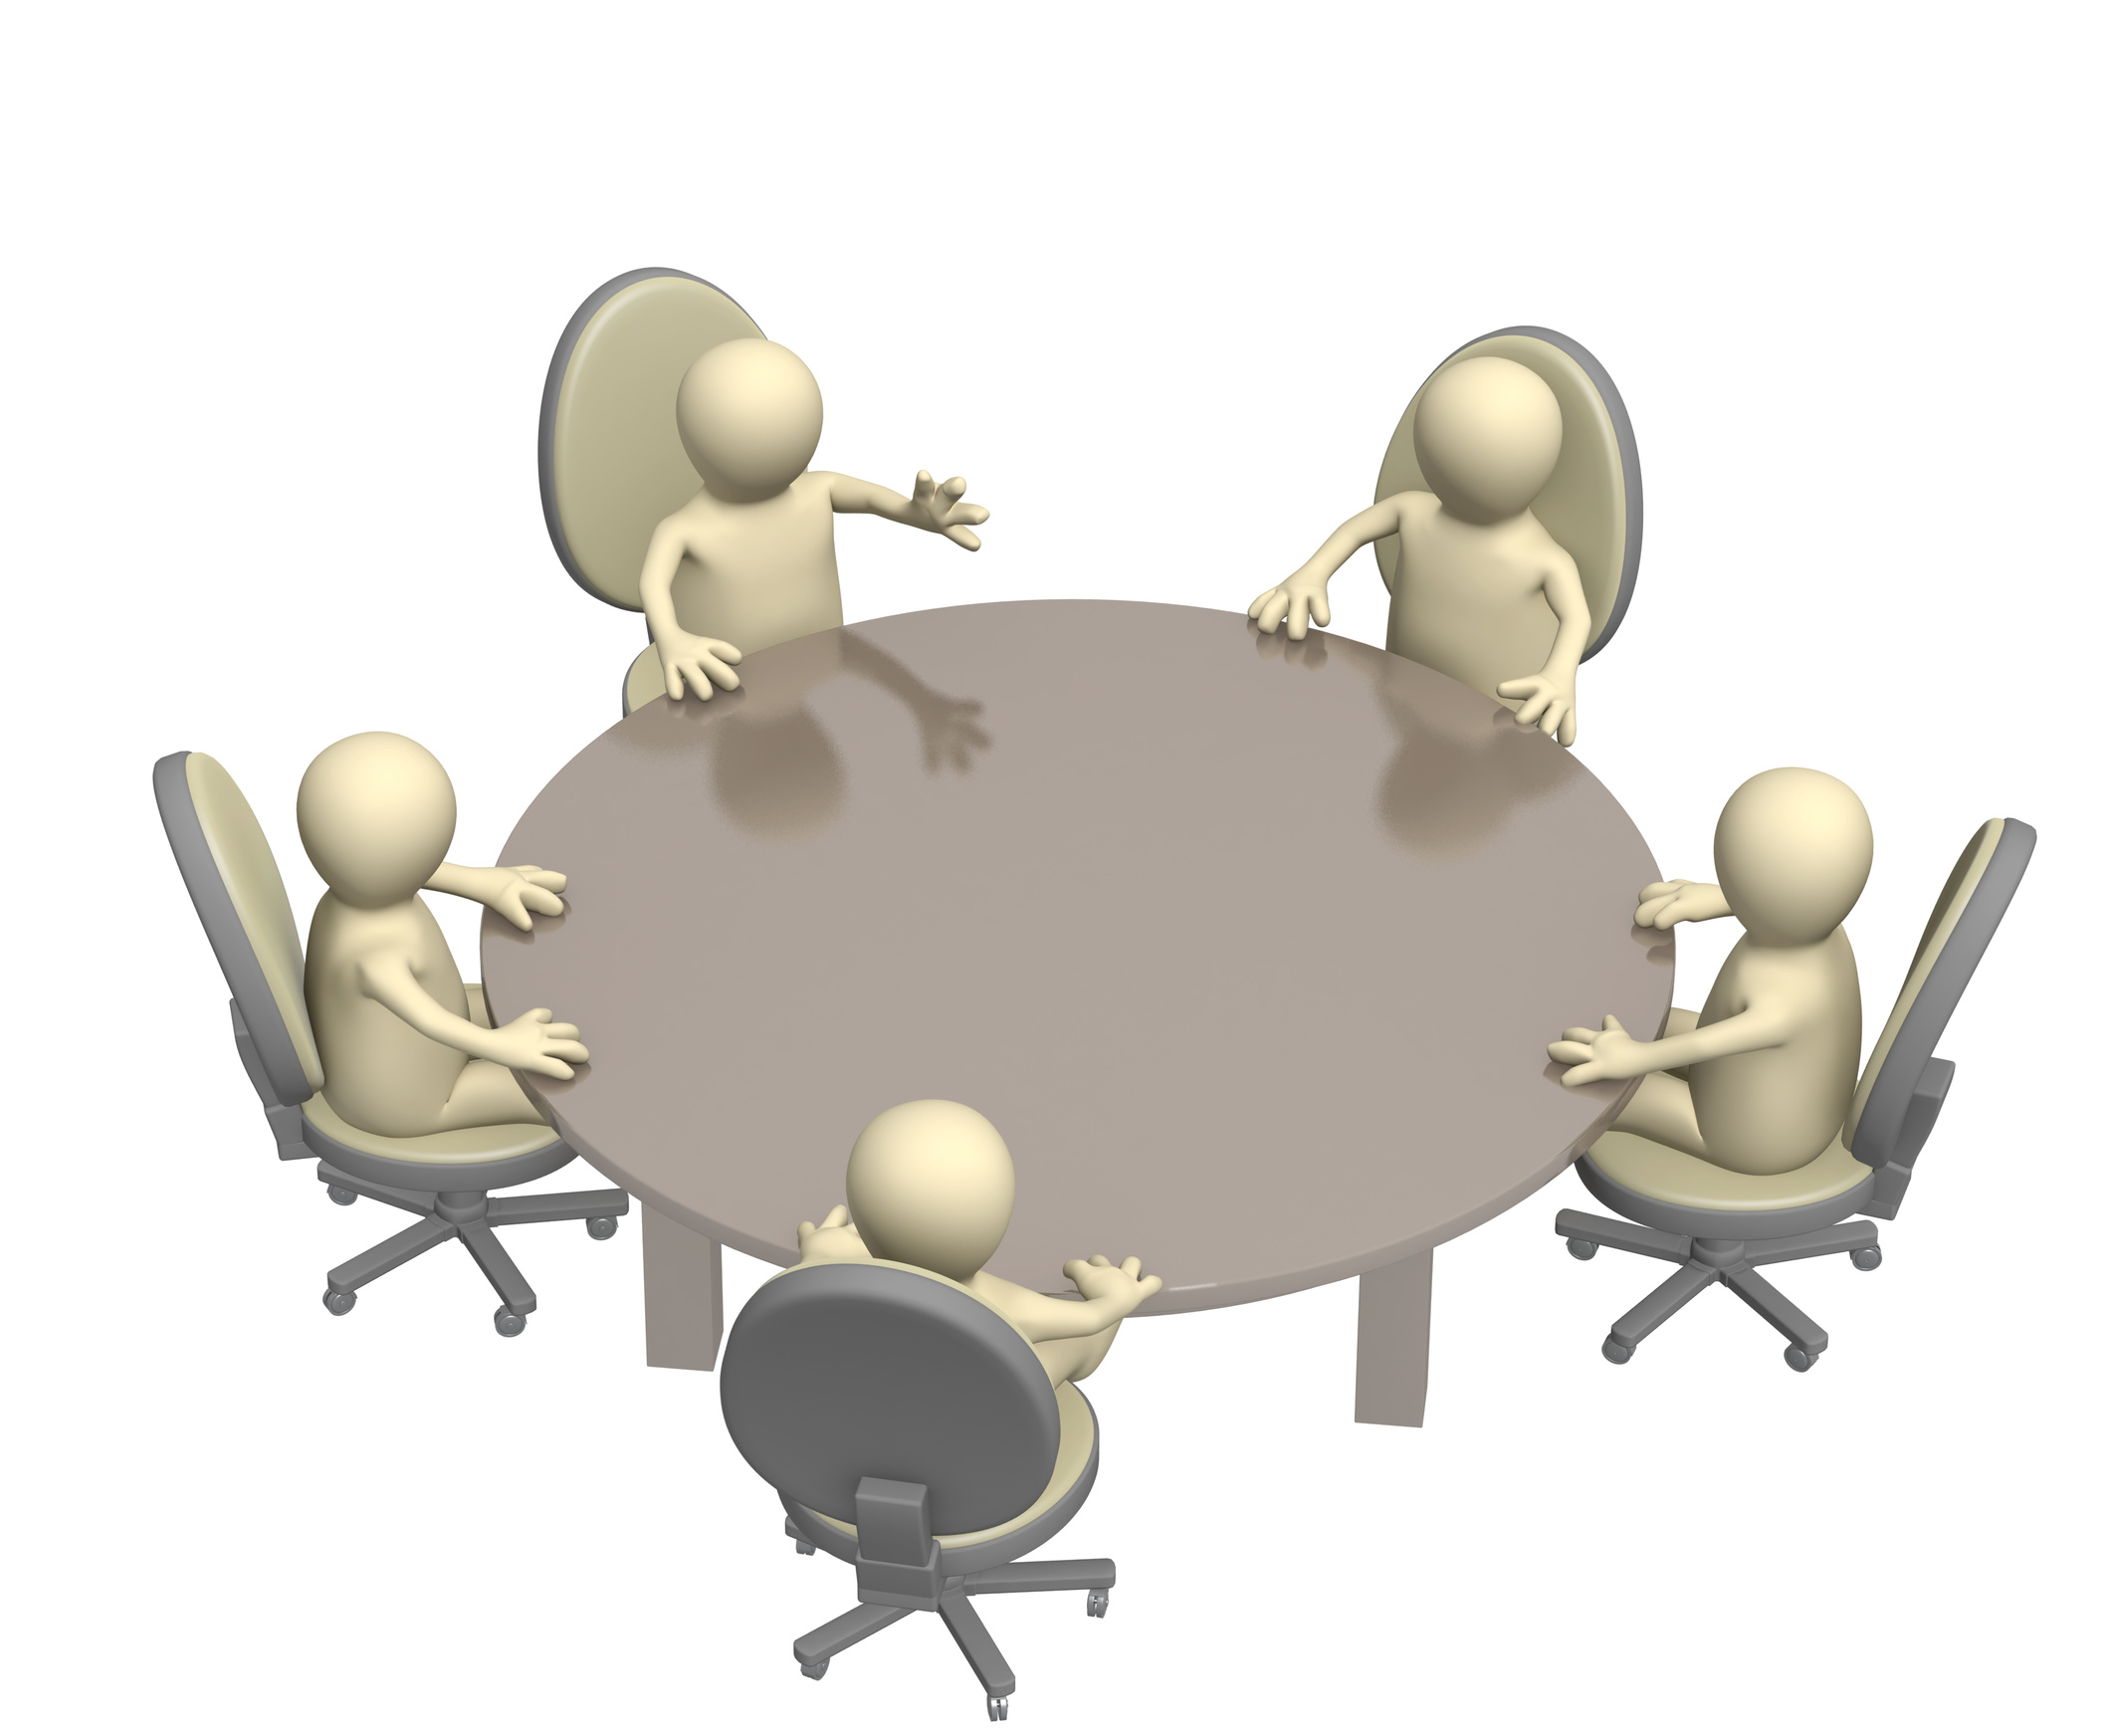 round-table-discussion-debate-Fotolia_15898322_L.jpg